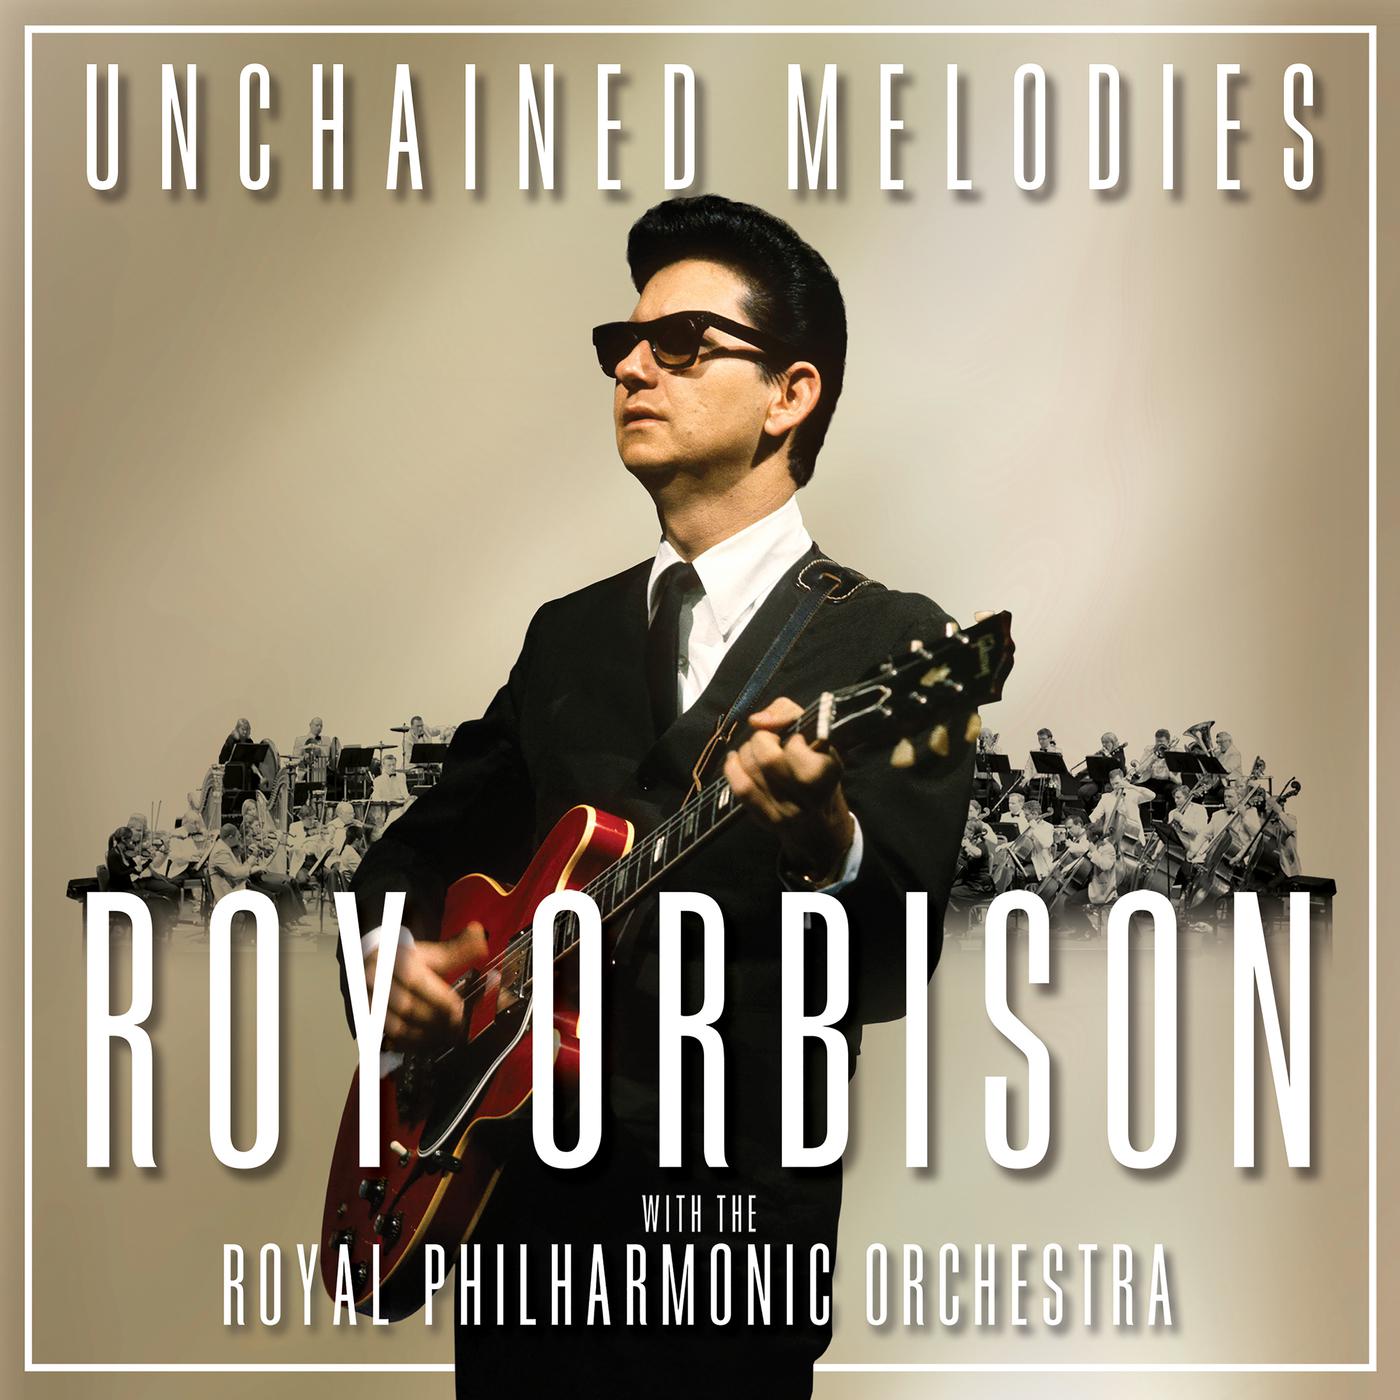 Roy Orbison - Heartbreak Radio